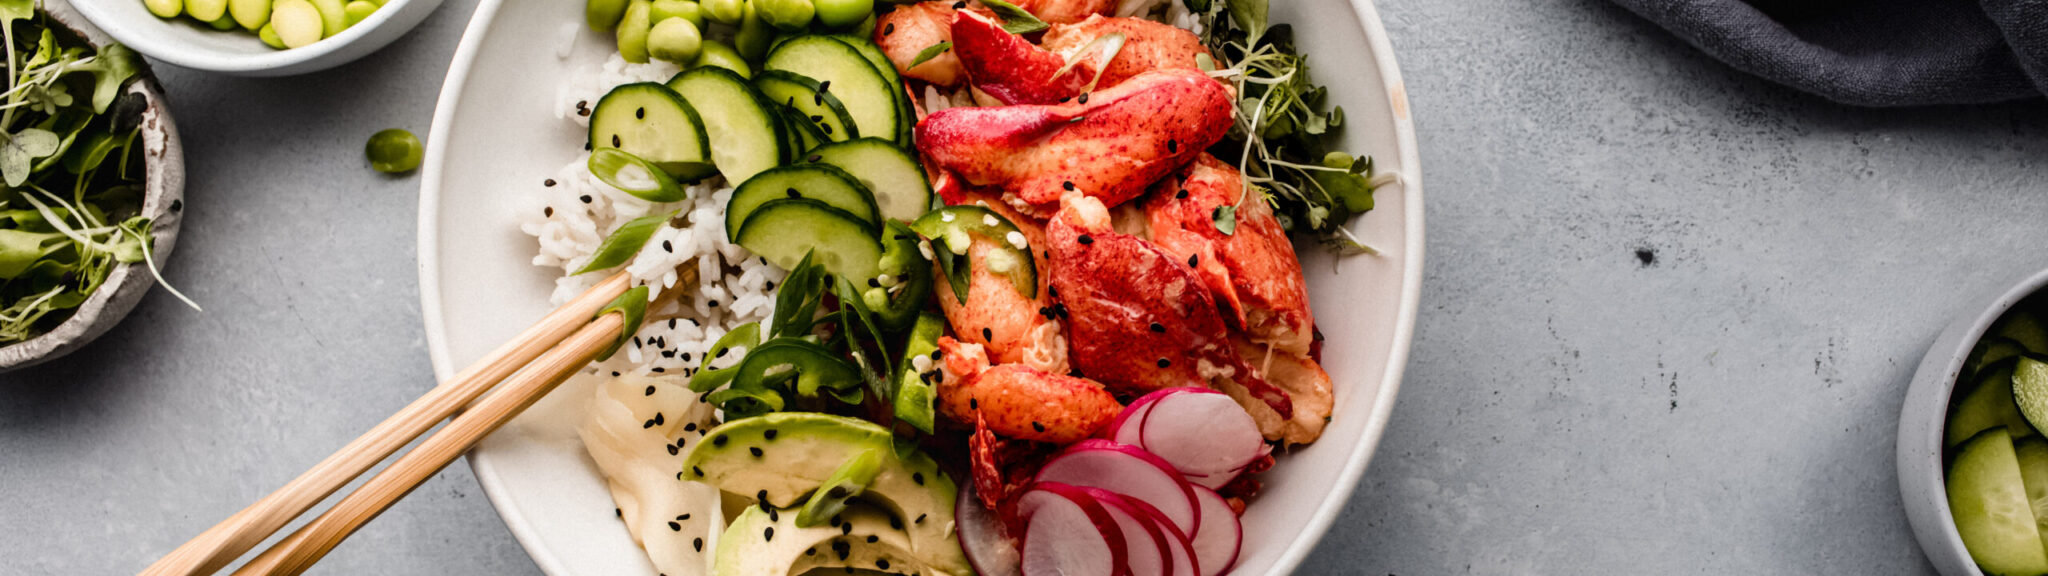 Maine Lobster Poke Bowls recipe image